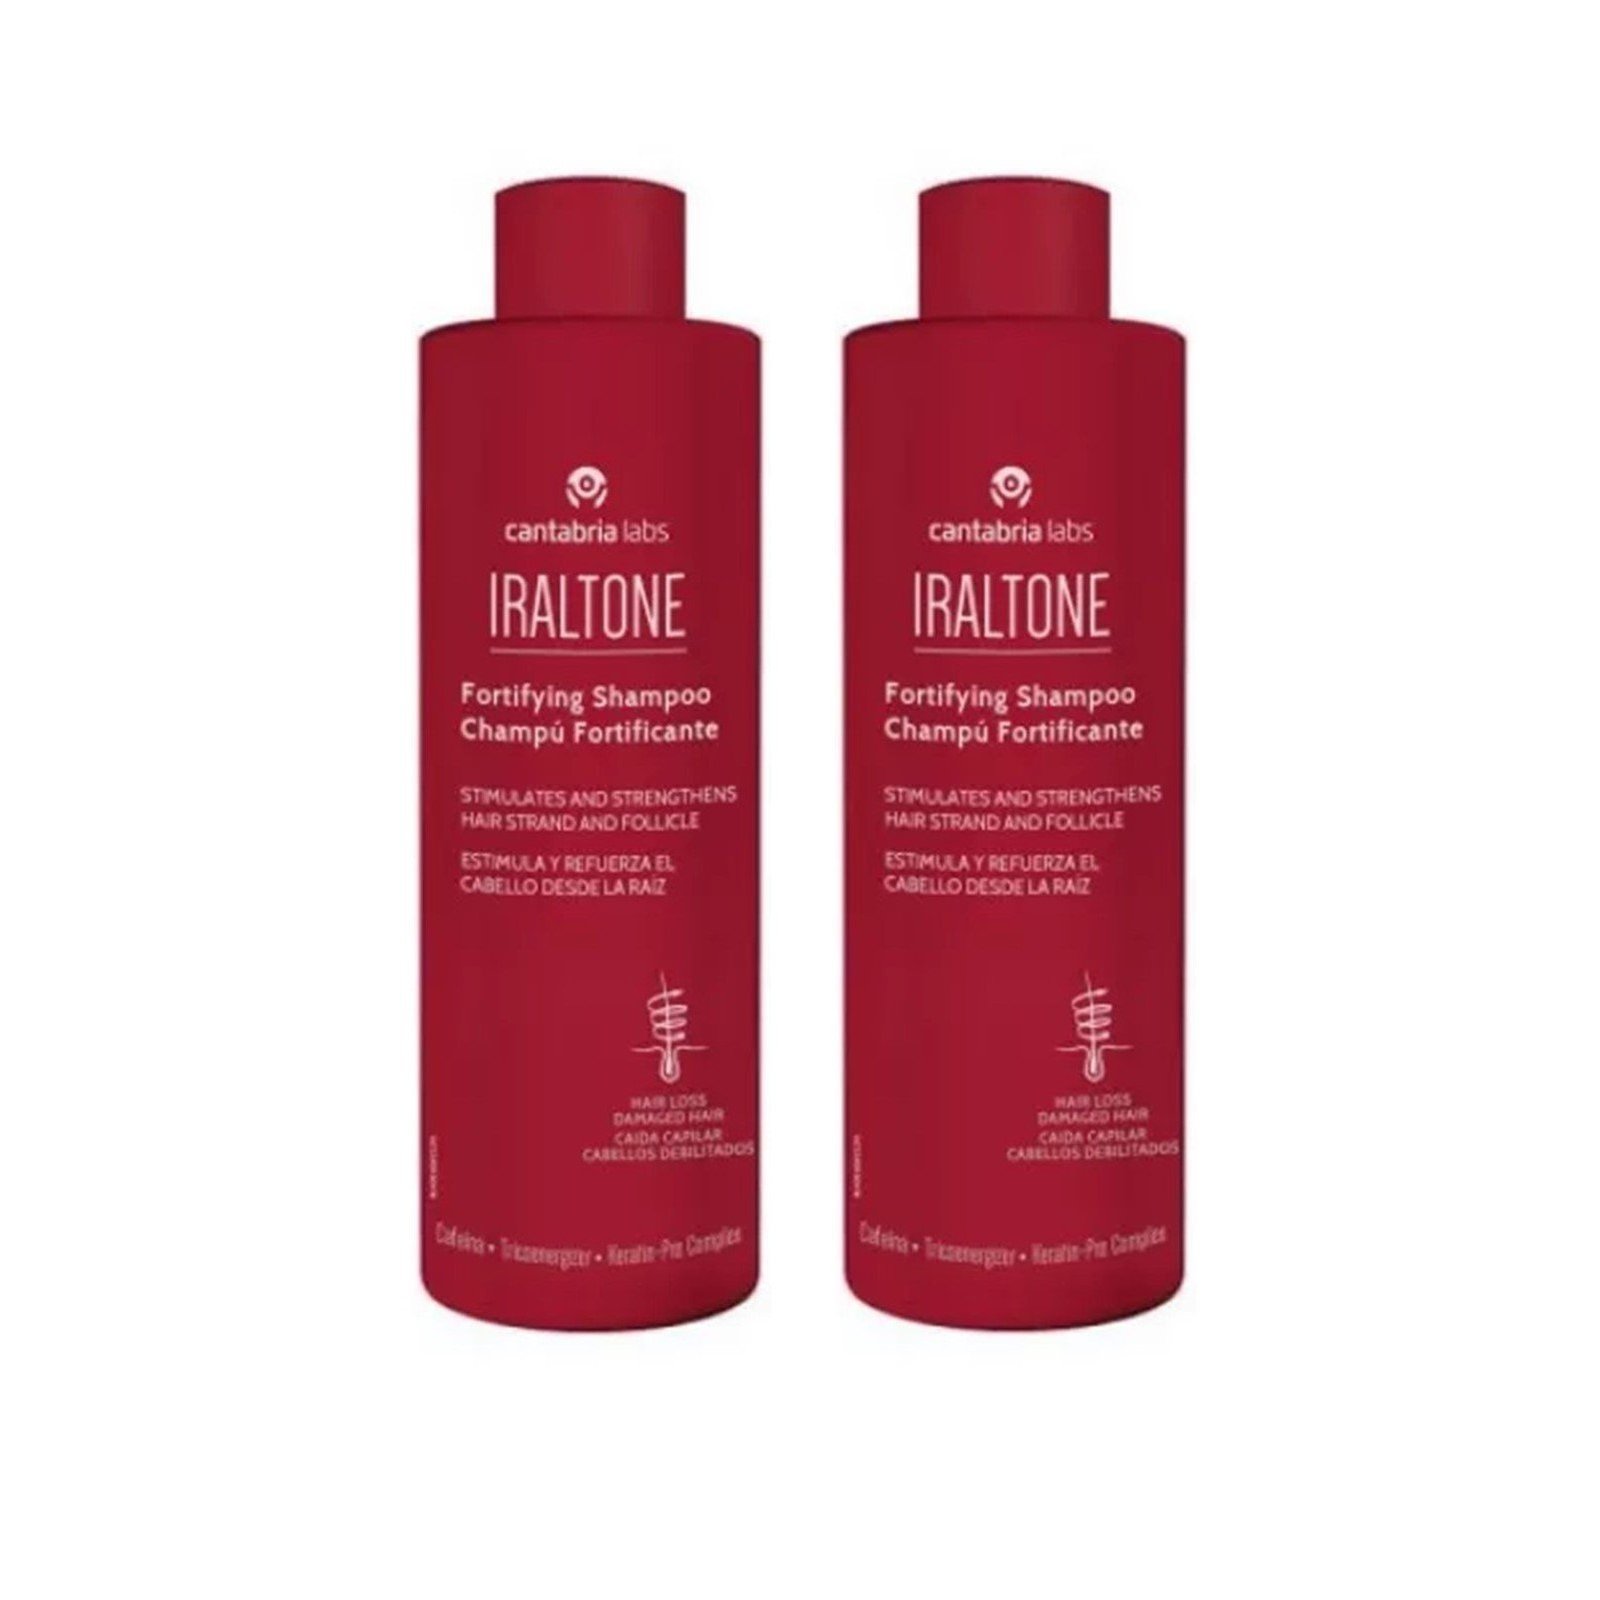 Iraltone Fortifying Shampoo 400ml x2 (13.5 fl oz x2)